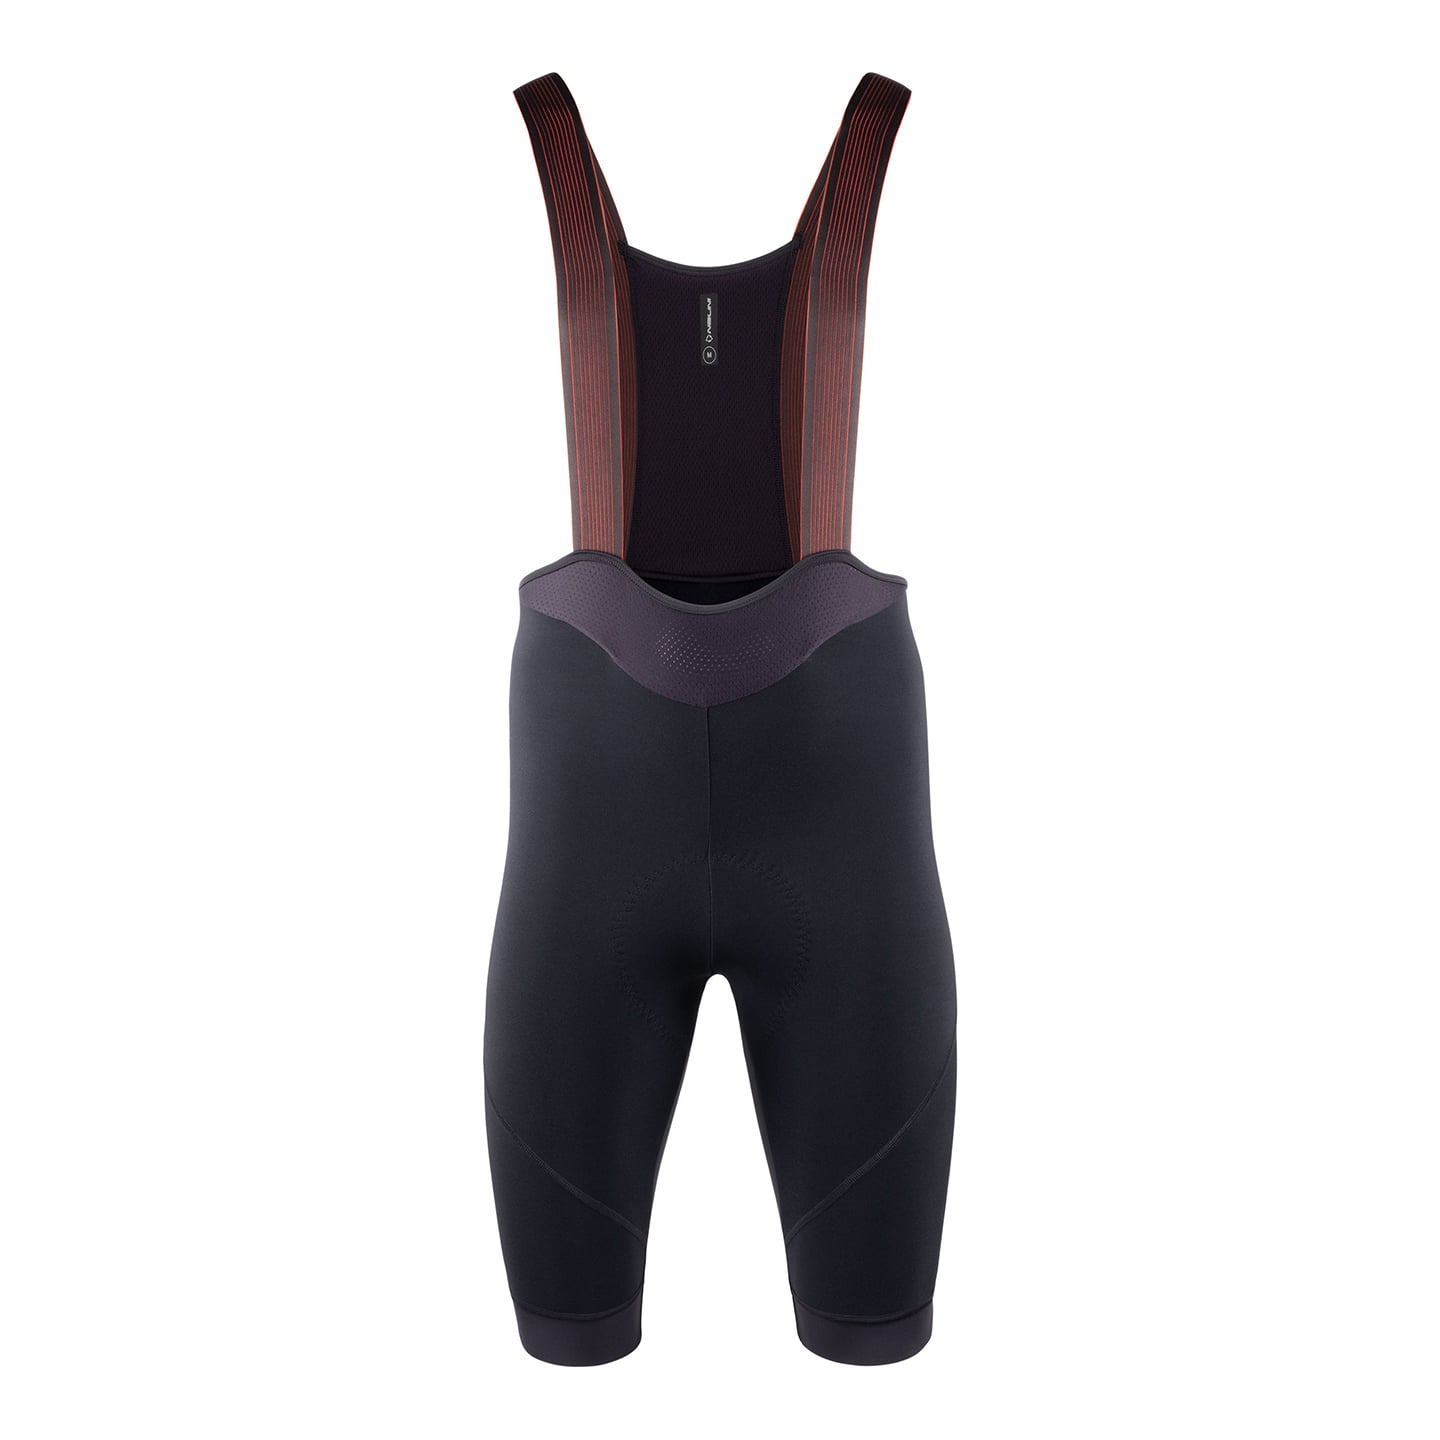 NALINI Ideale Thermal Bib Shorts, for men, size M, Cycle shorts, Cycling clothing